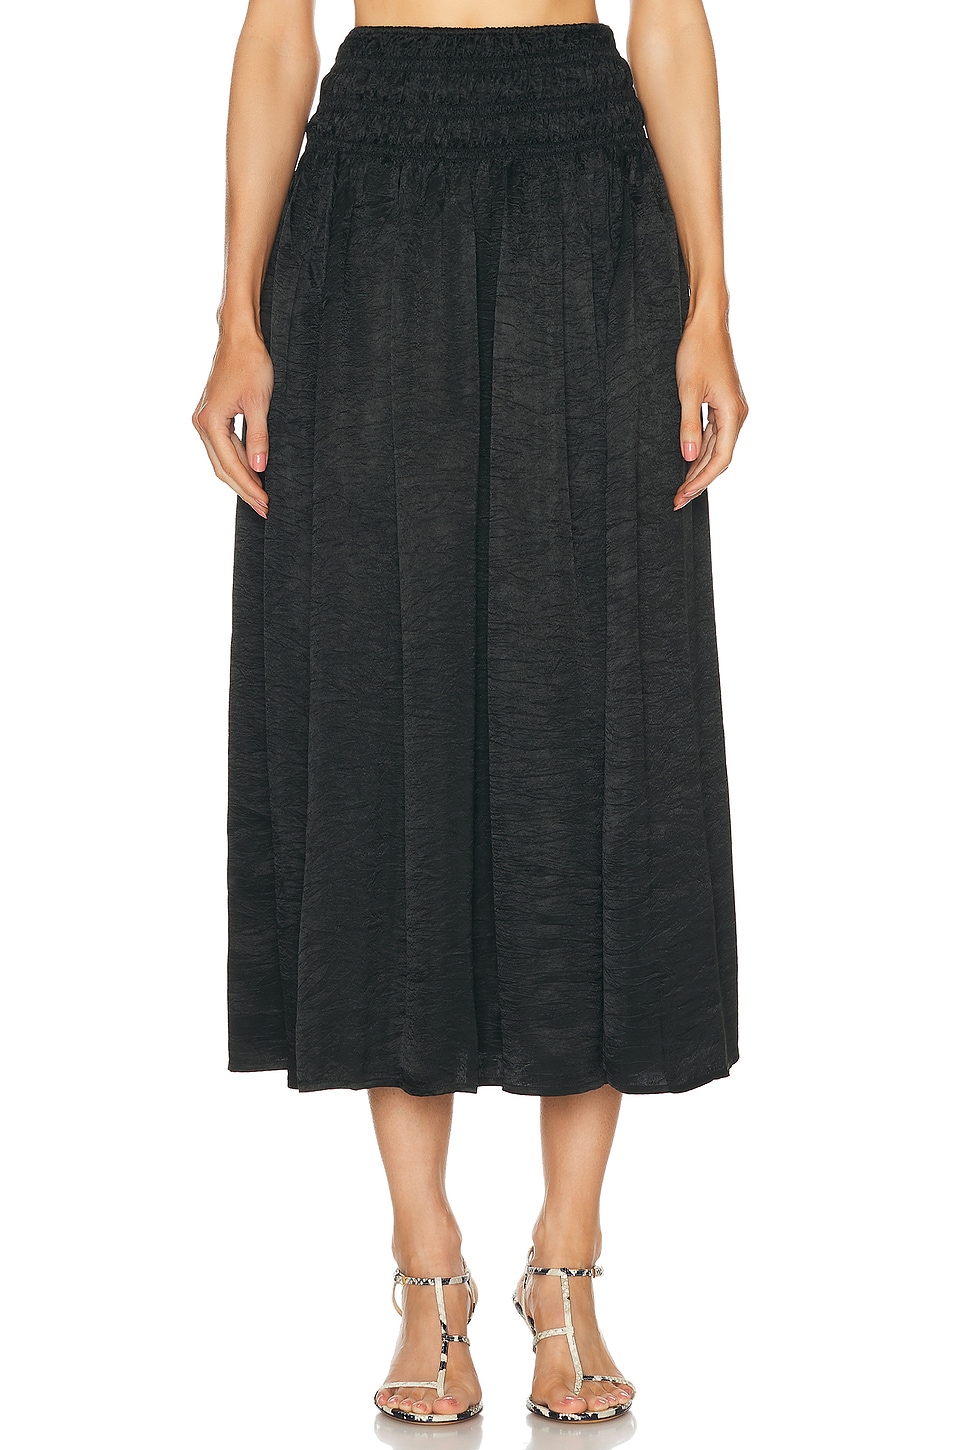 Image 1 of Enza Costa Textured Satin Smocked Skirt in Black